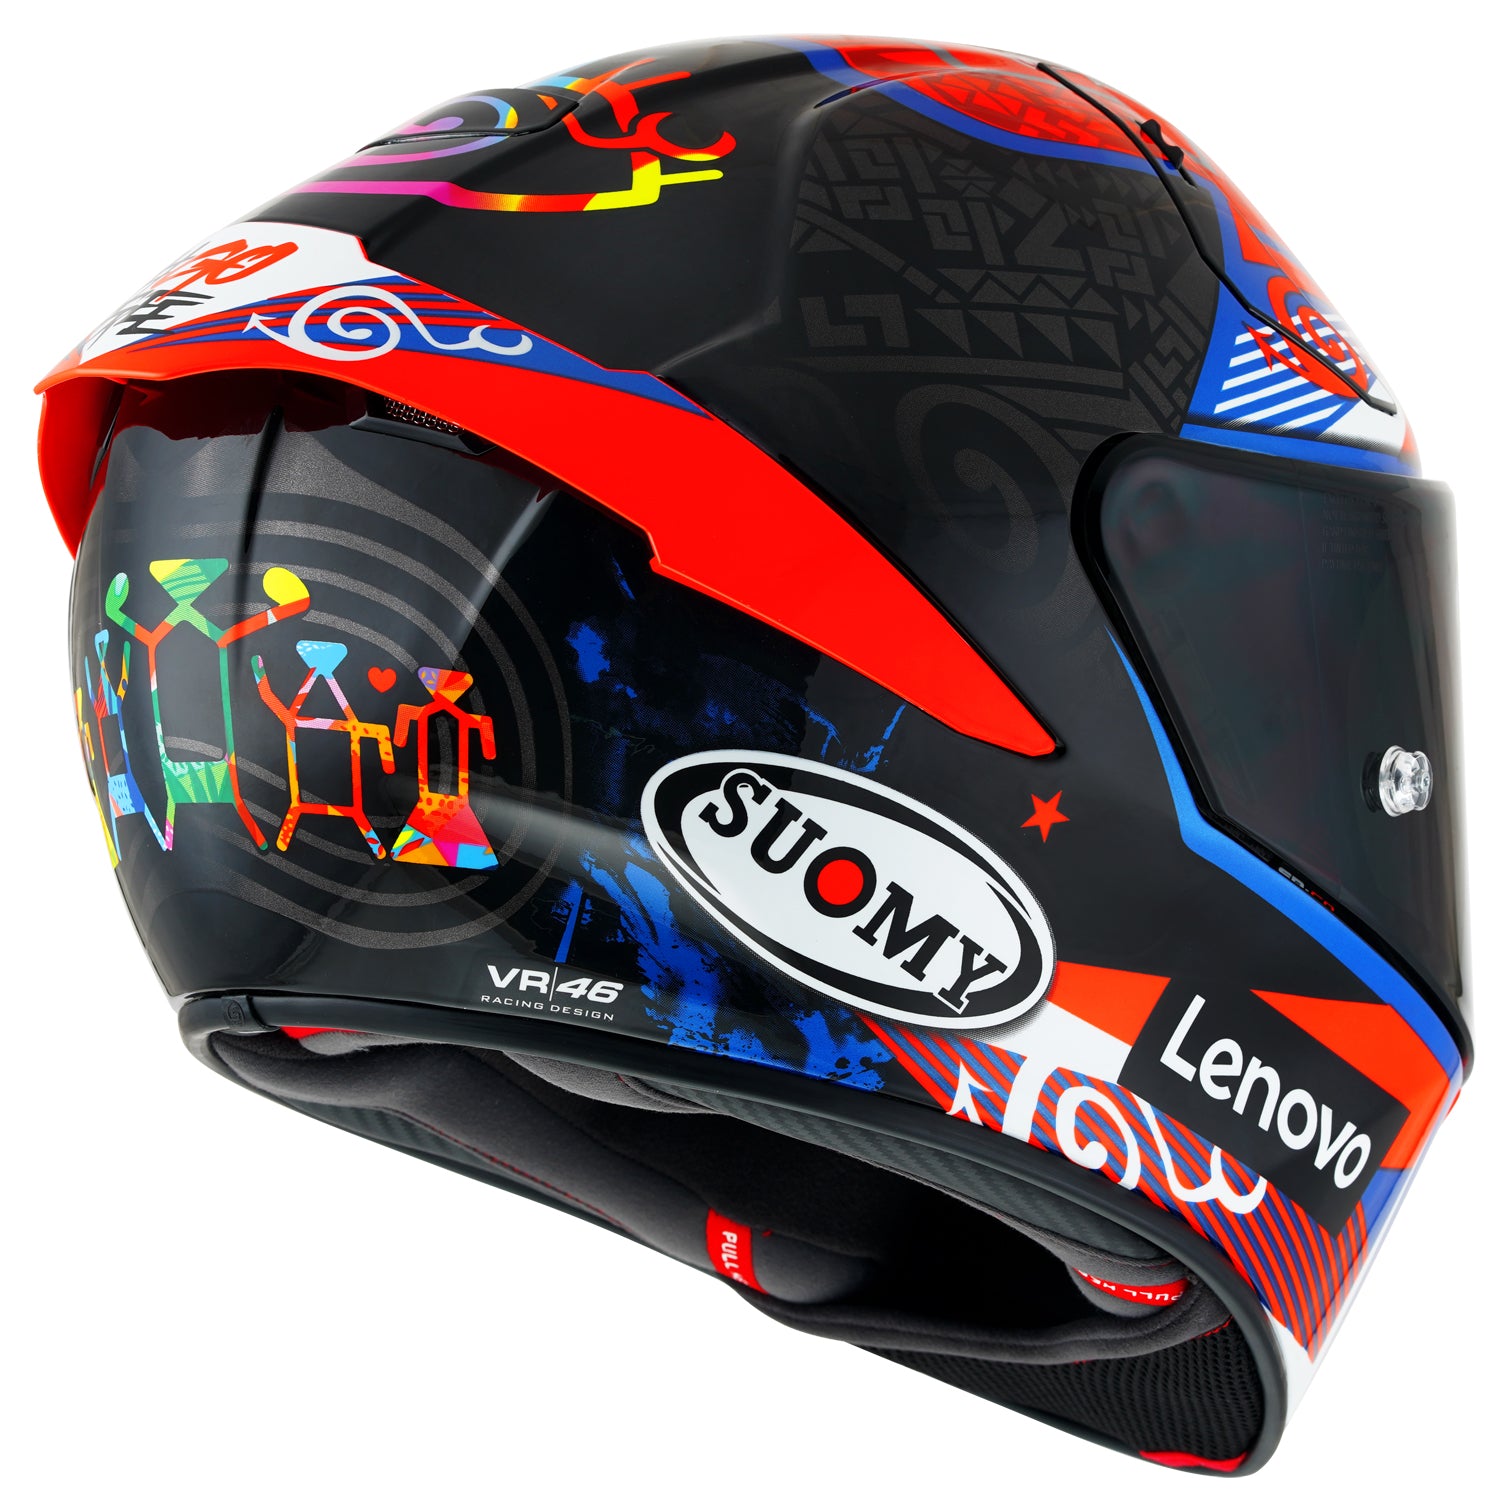 Suomy SR-GP Bagnaia 2021 WITH LOGO 21 Helmet